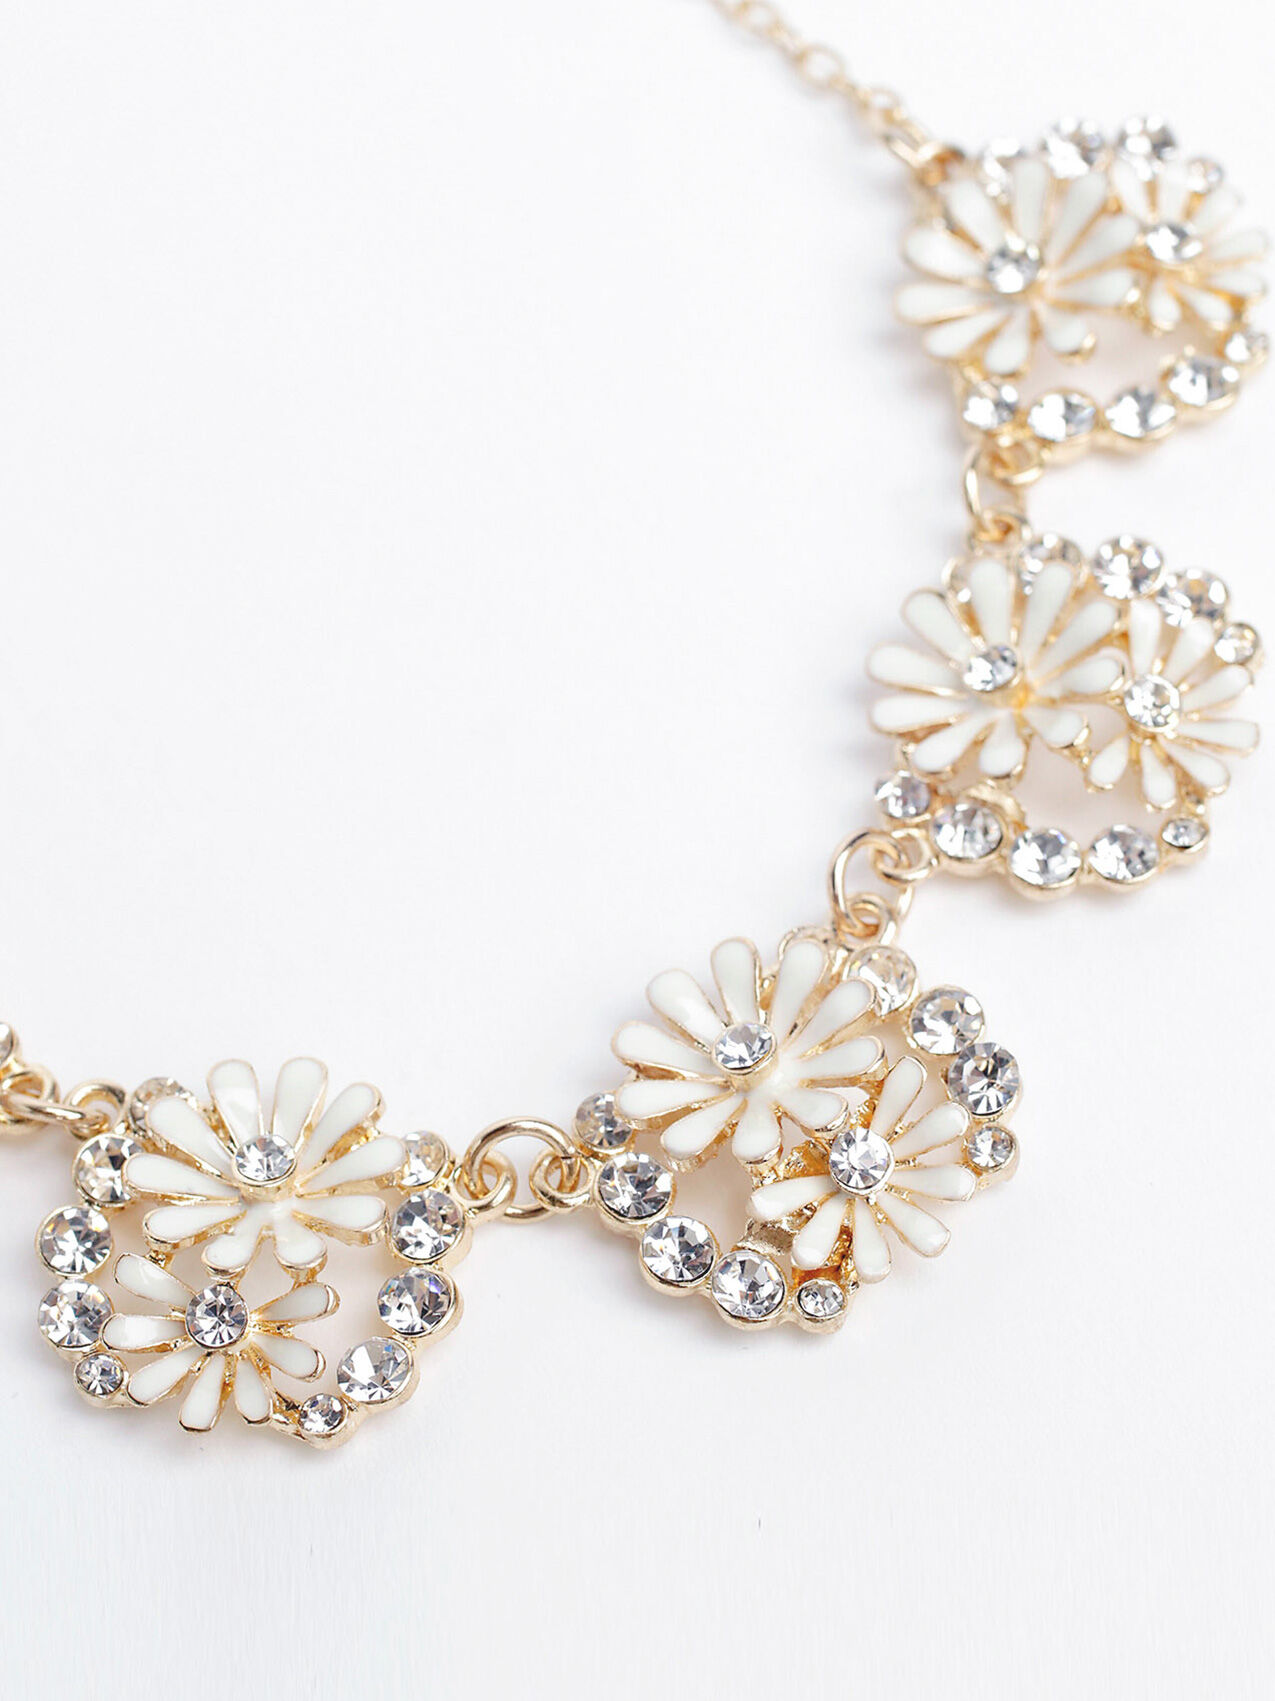 Short Gold & Ivory Flower Necklace